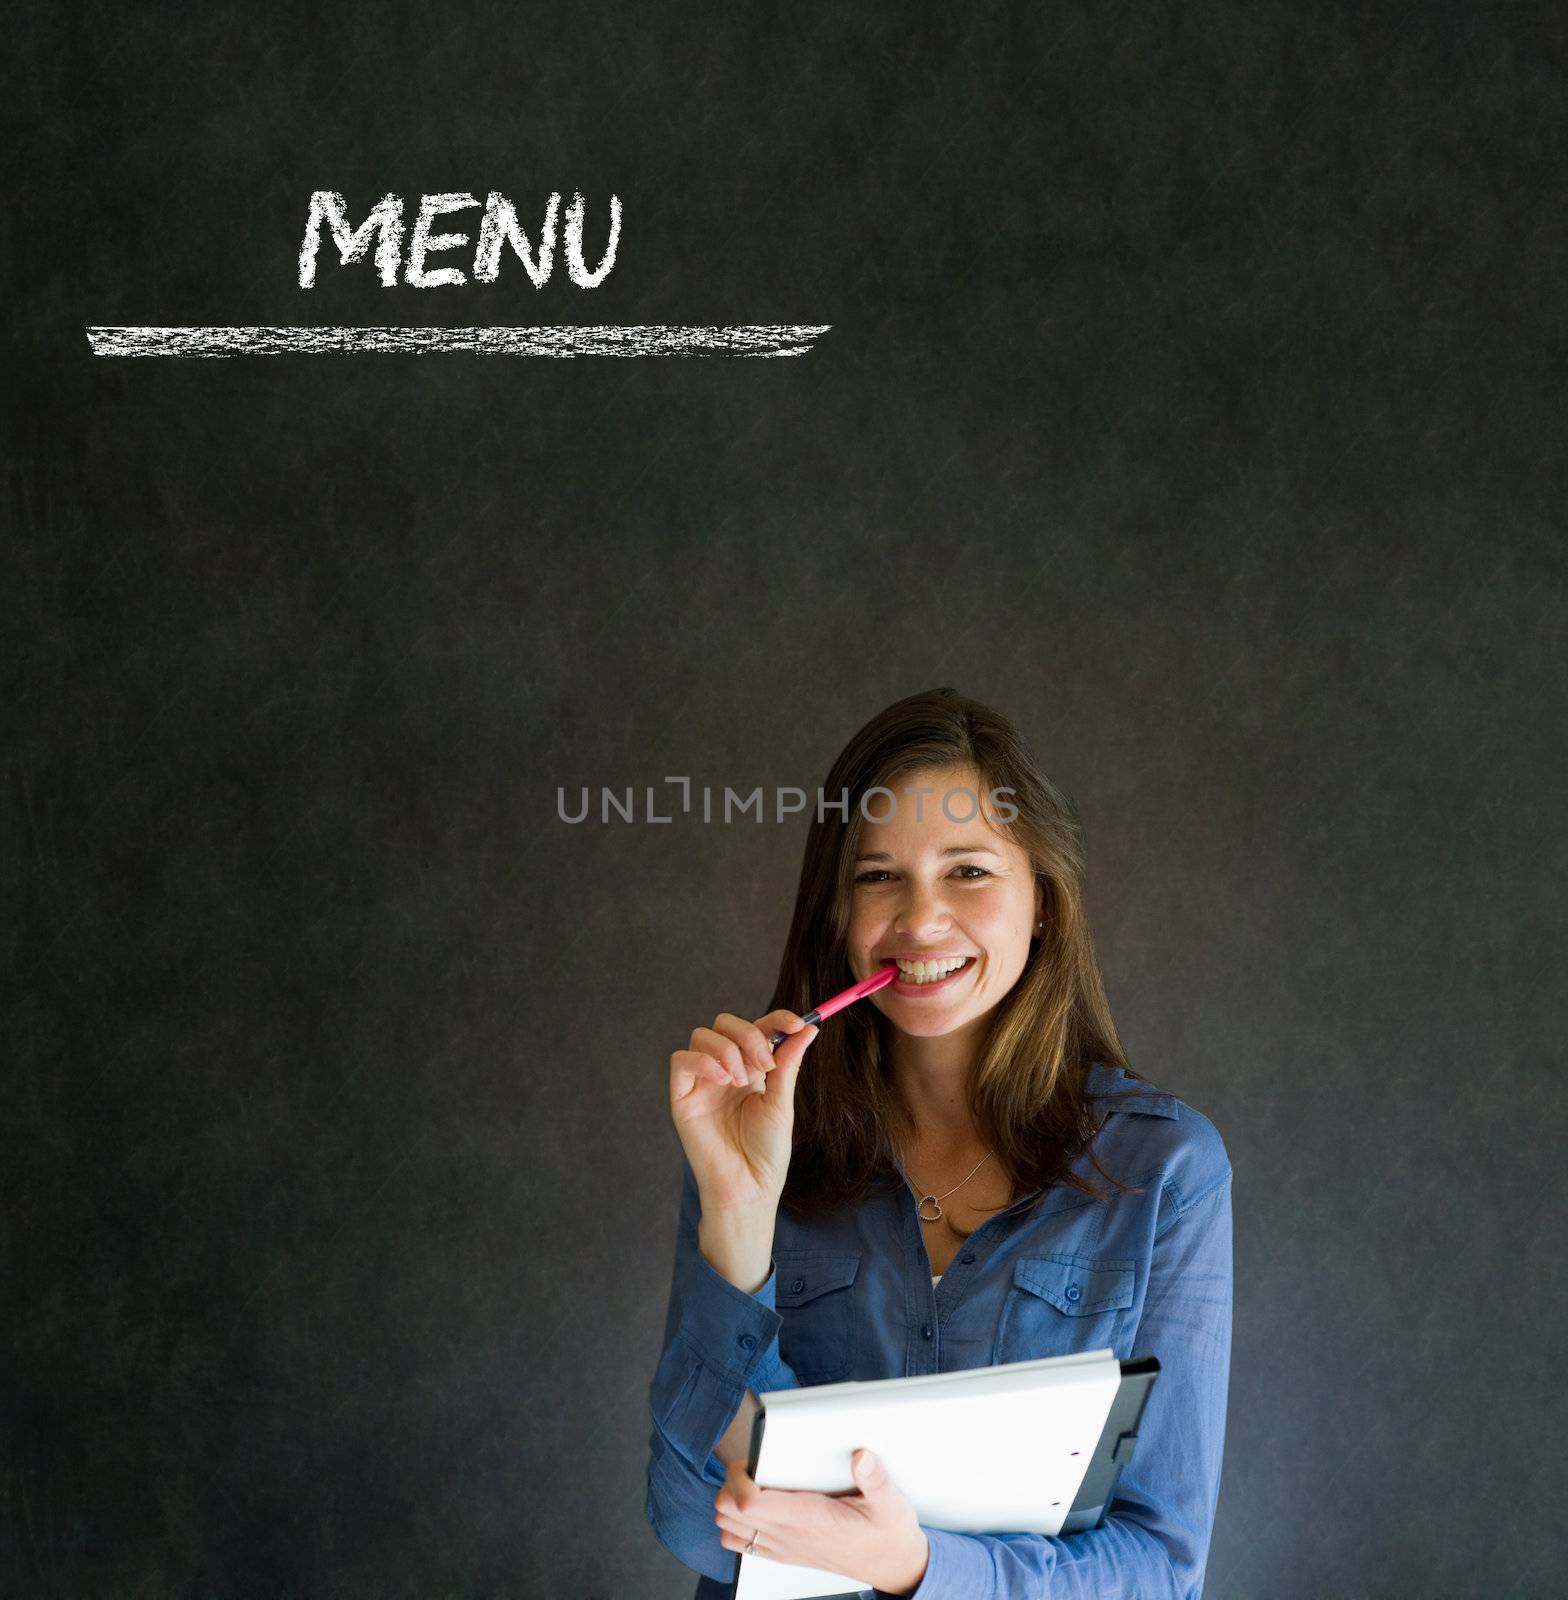 Businesswoman, restaurant owner or chef with chalk menu sign blackboard background